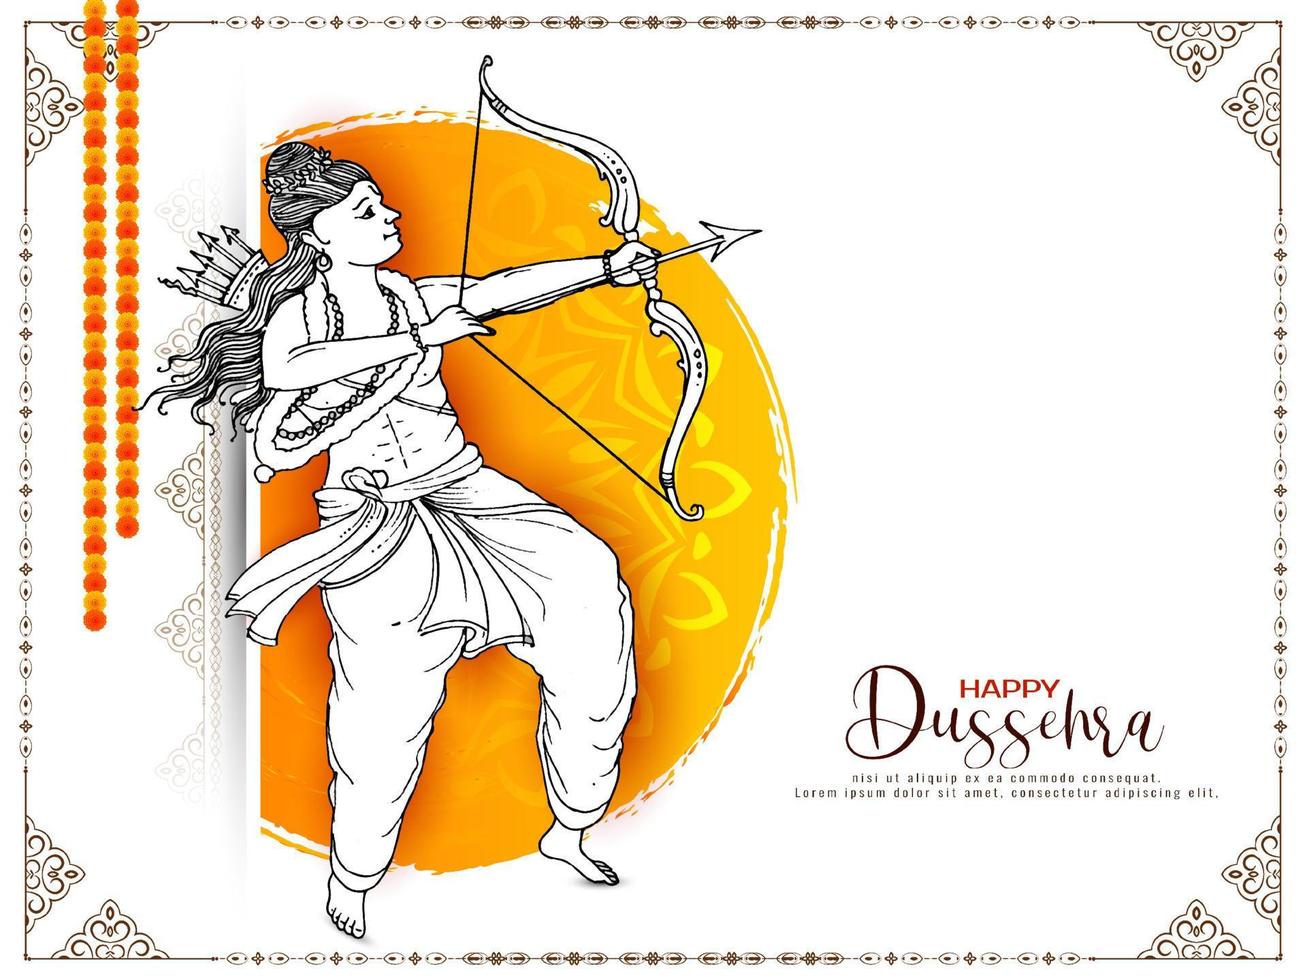 Happy Dussehra festival card with lord Rama killing Ravana concept ...